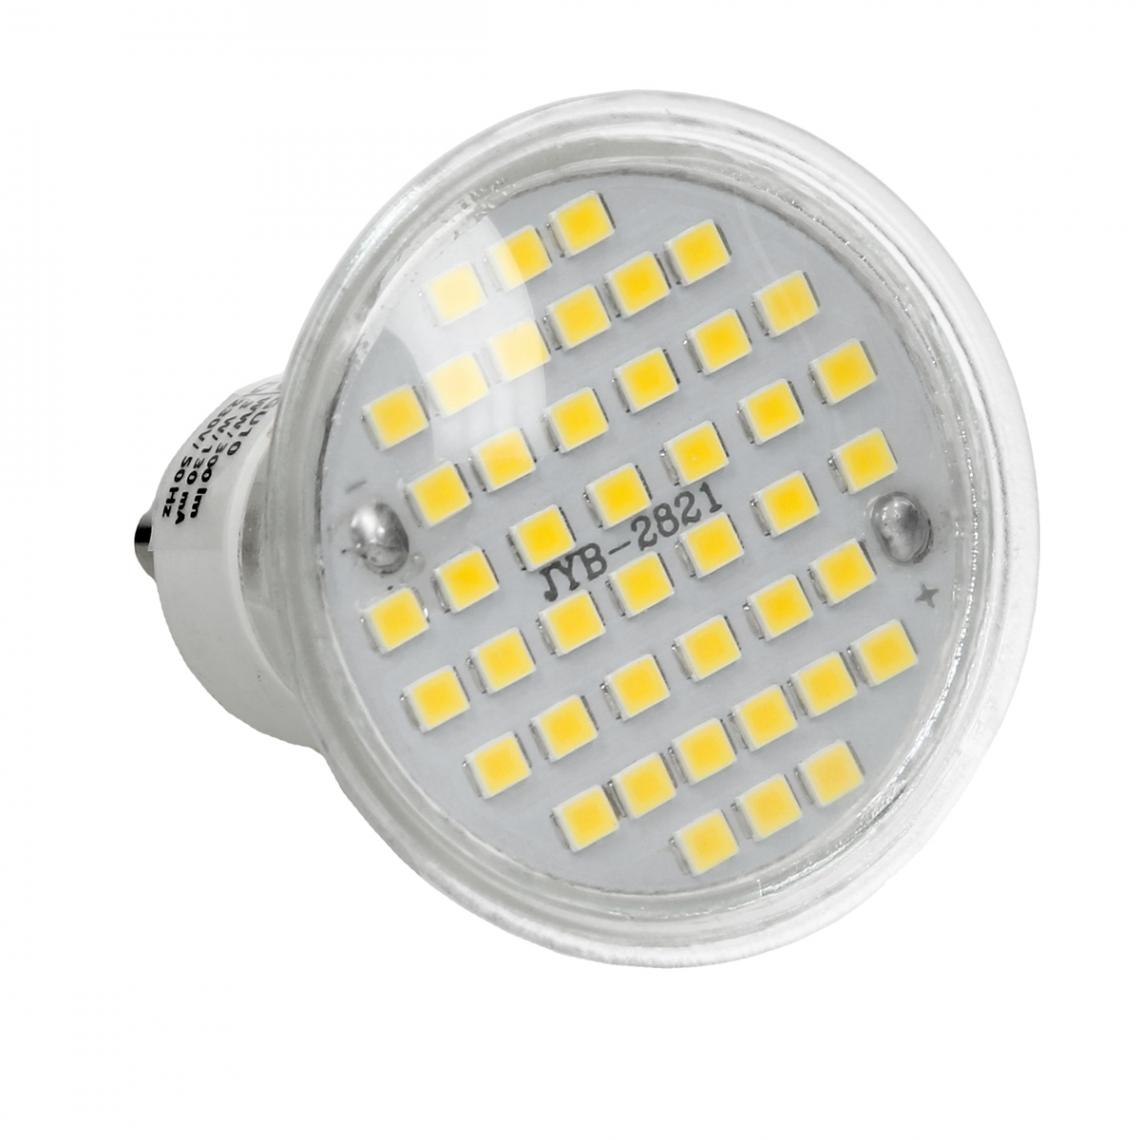 Ecd Germany - Lampe LED GU10 44SMD Spot 3W en verre blanc chaud 3000K - Ampoules LED